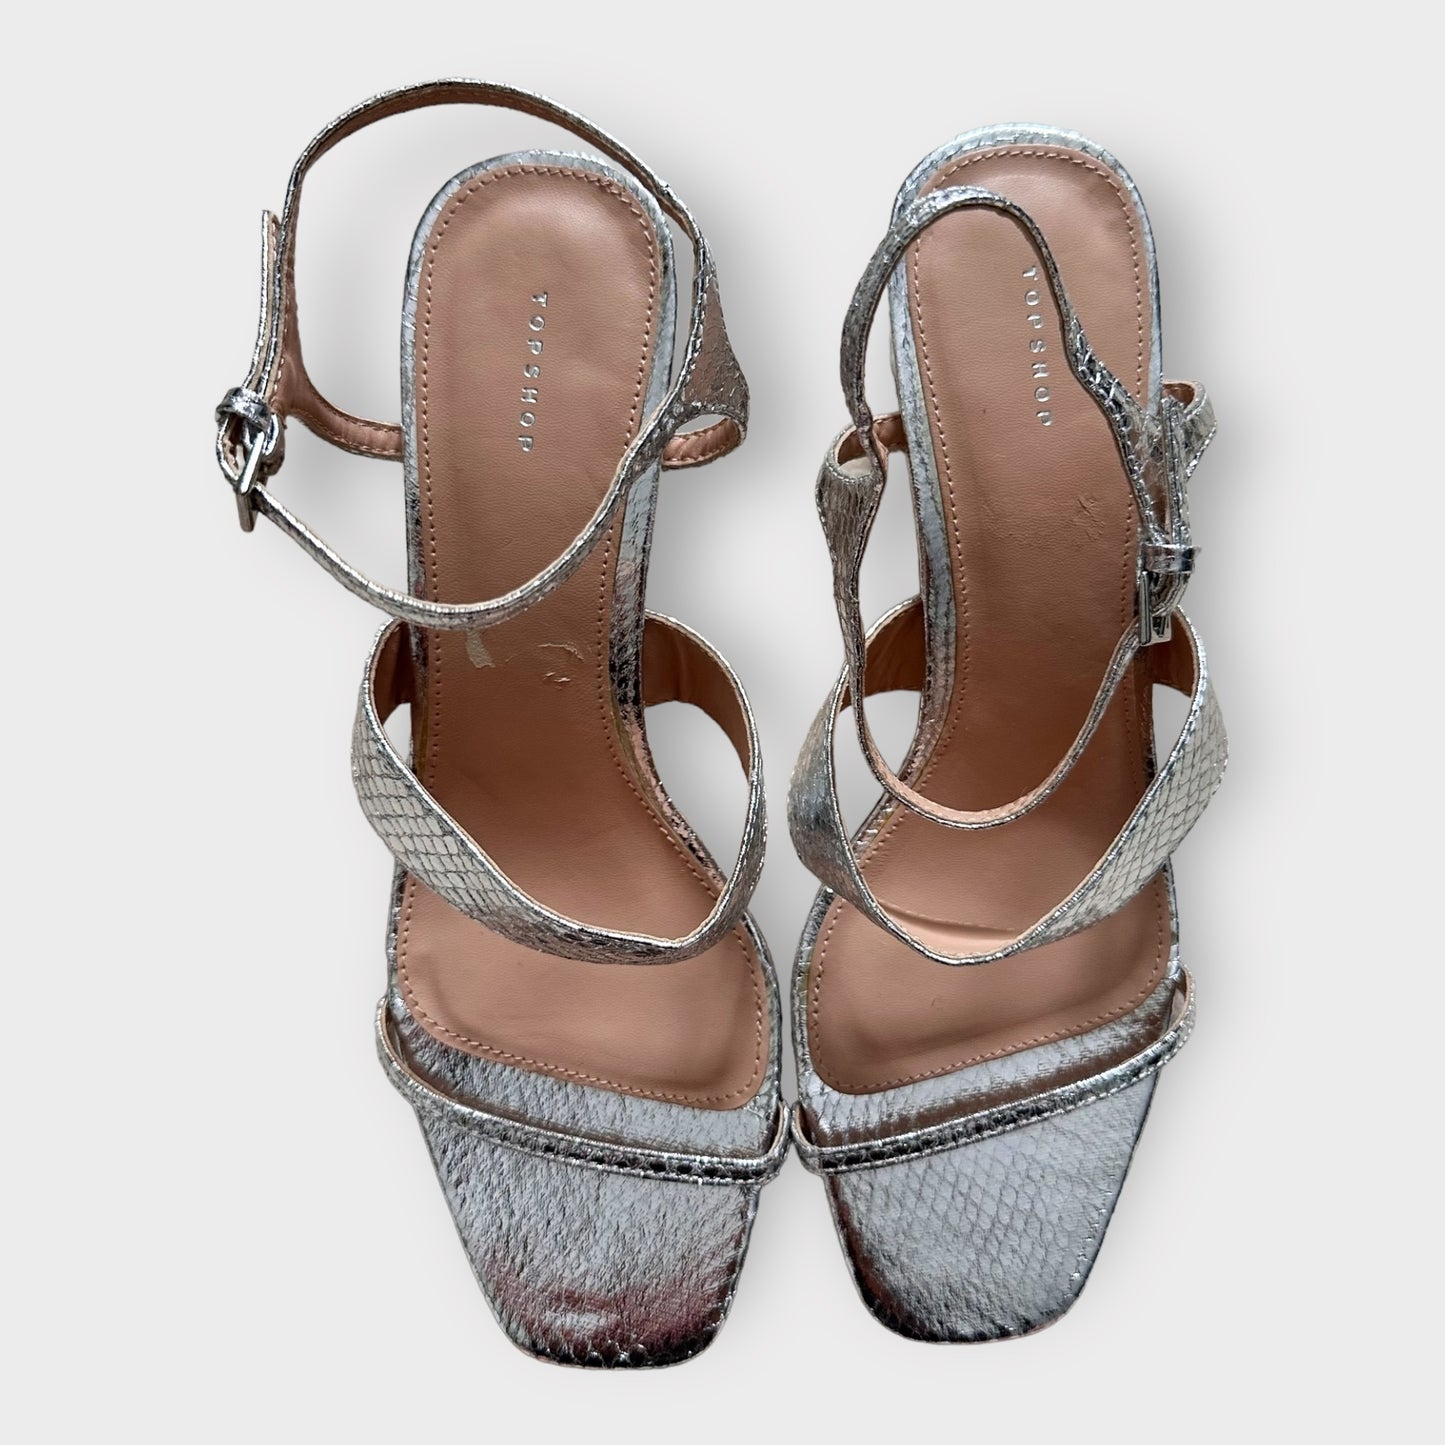 Topshop silver chrome block heel sandals shoes EU 39 UK 6 new bnwot